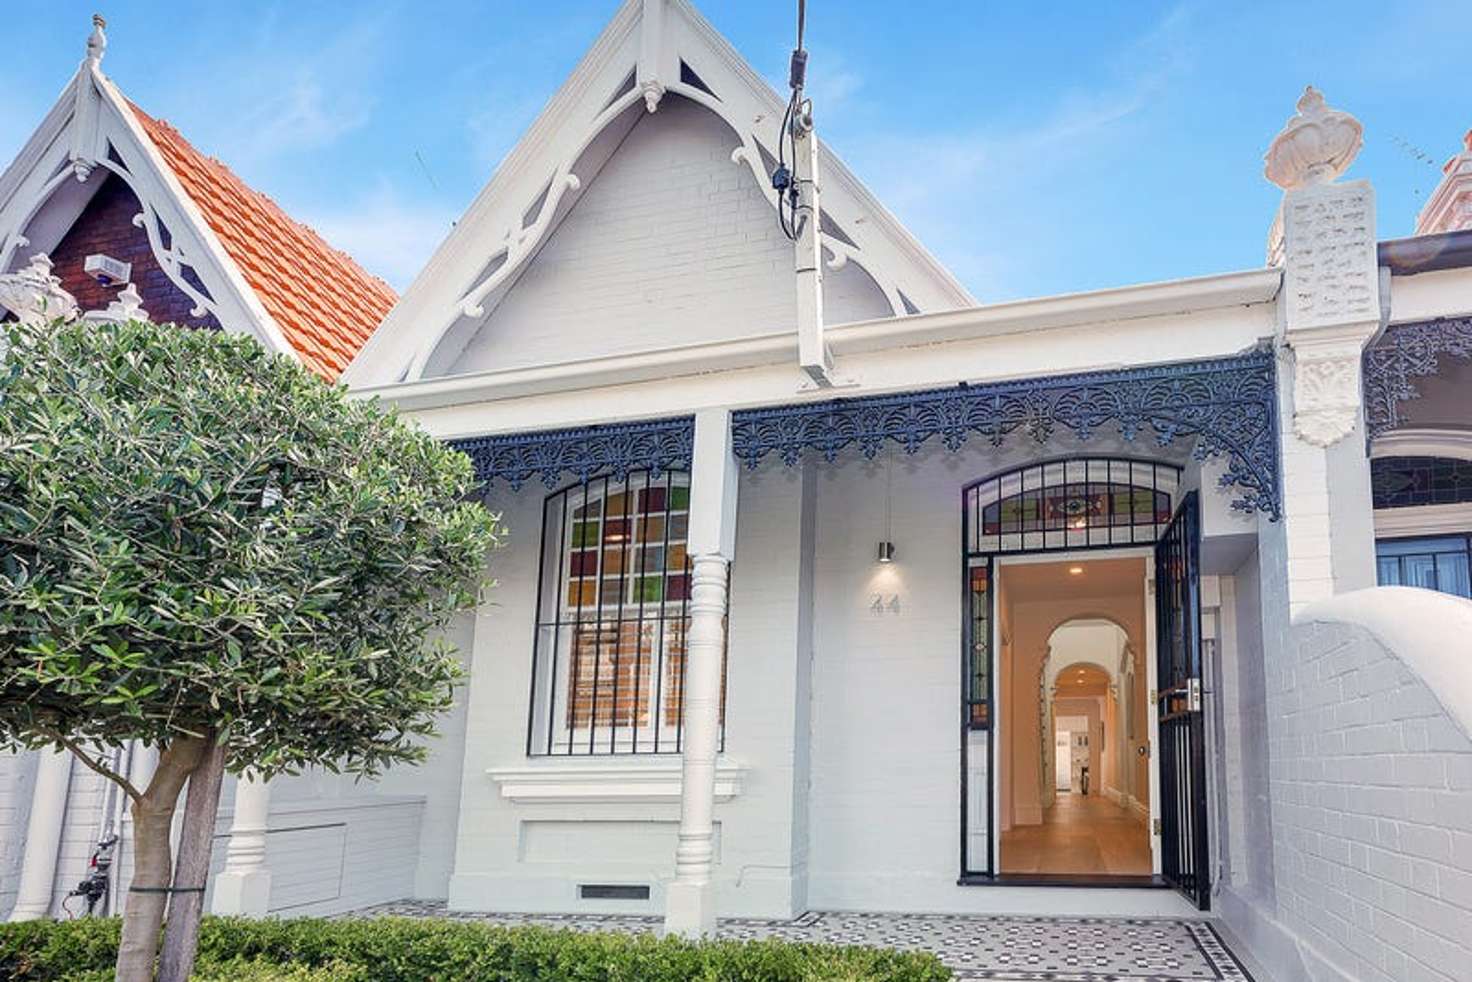 Main view of Homely house listing, 44 Union Street, Paddington NSW 2021